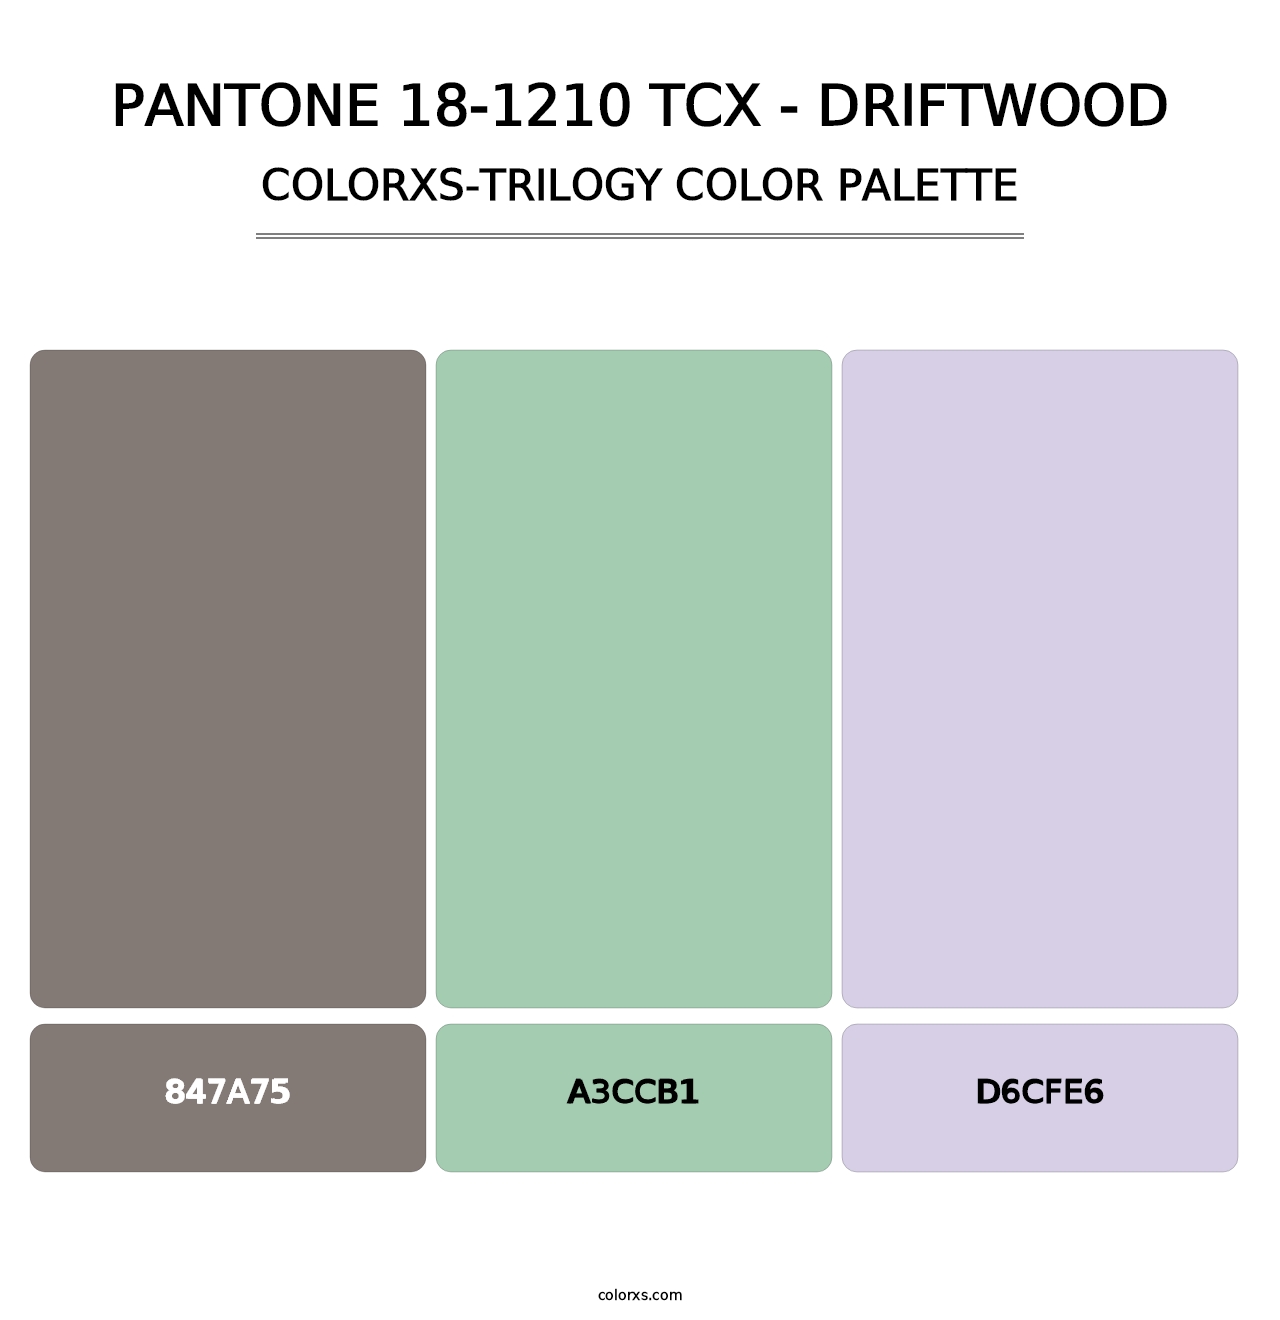 PANTONE 18-1210 TCX - Driftwood - Colorxs Trilogy Palette